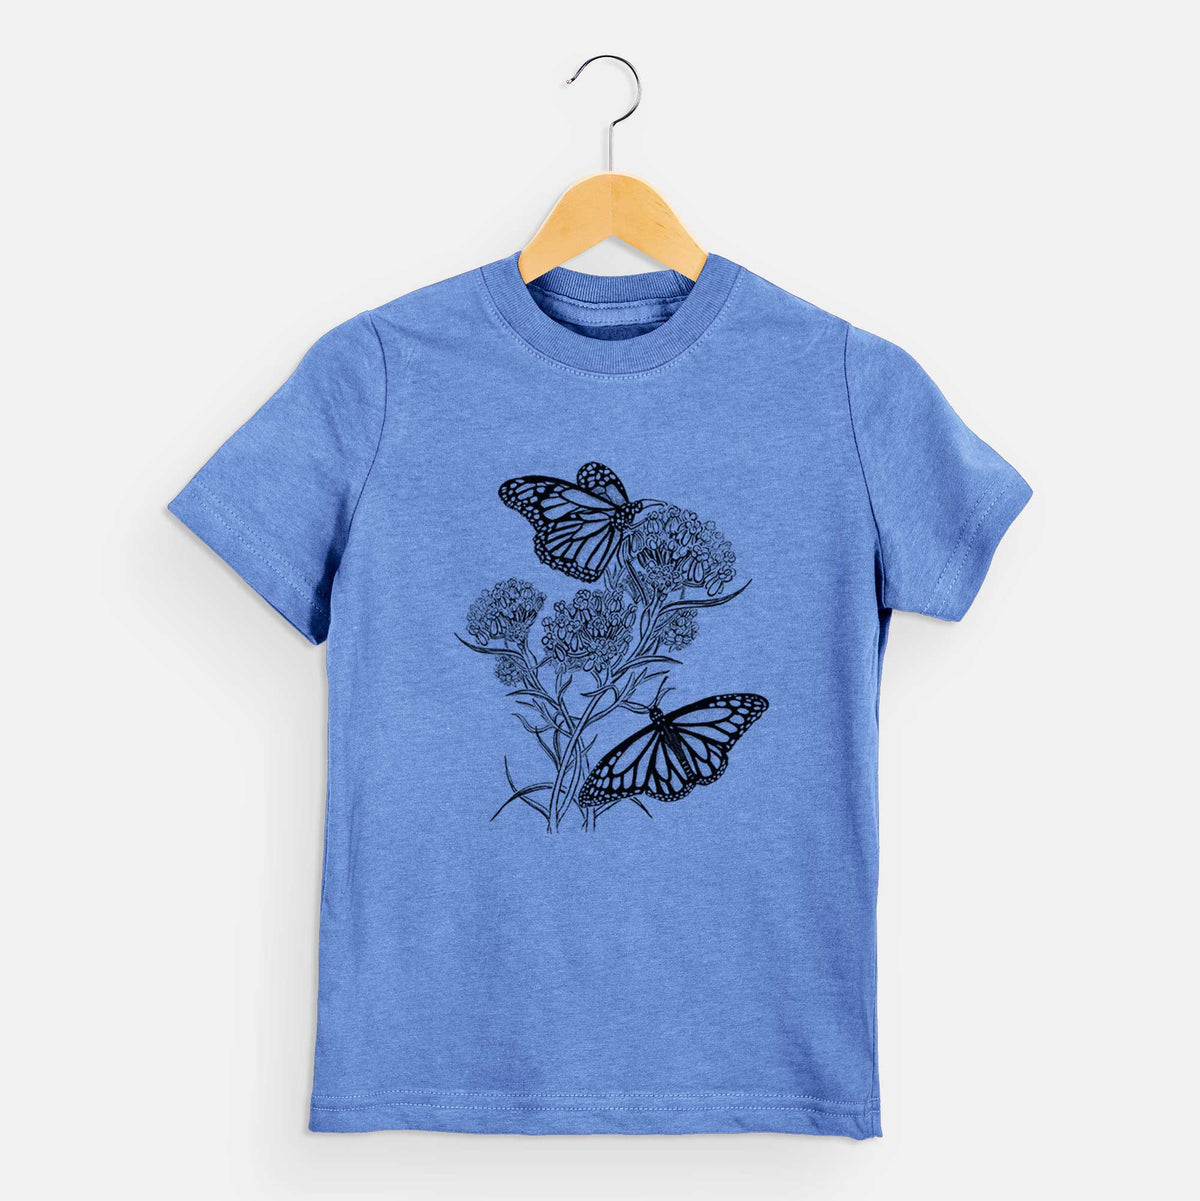 Narrowleaf Milkweed with Monarchs - Kids Shirt